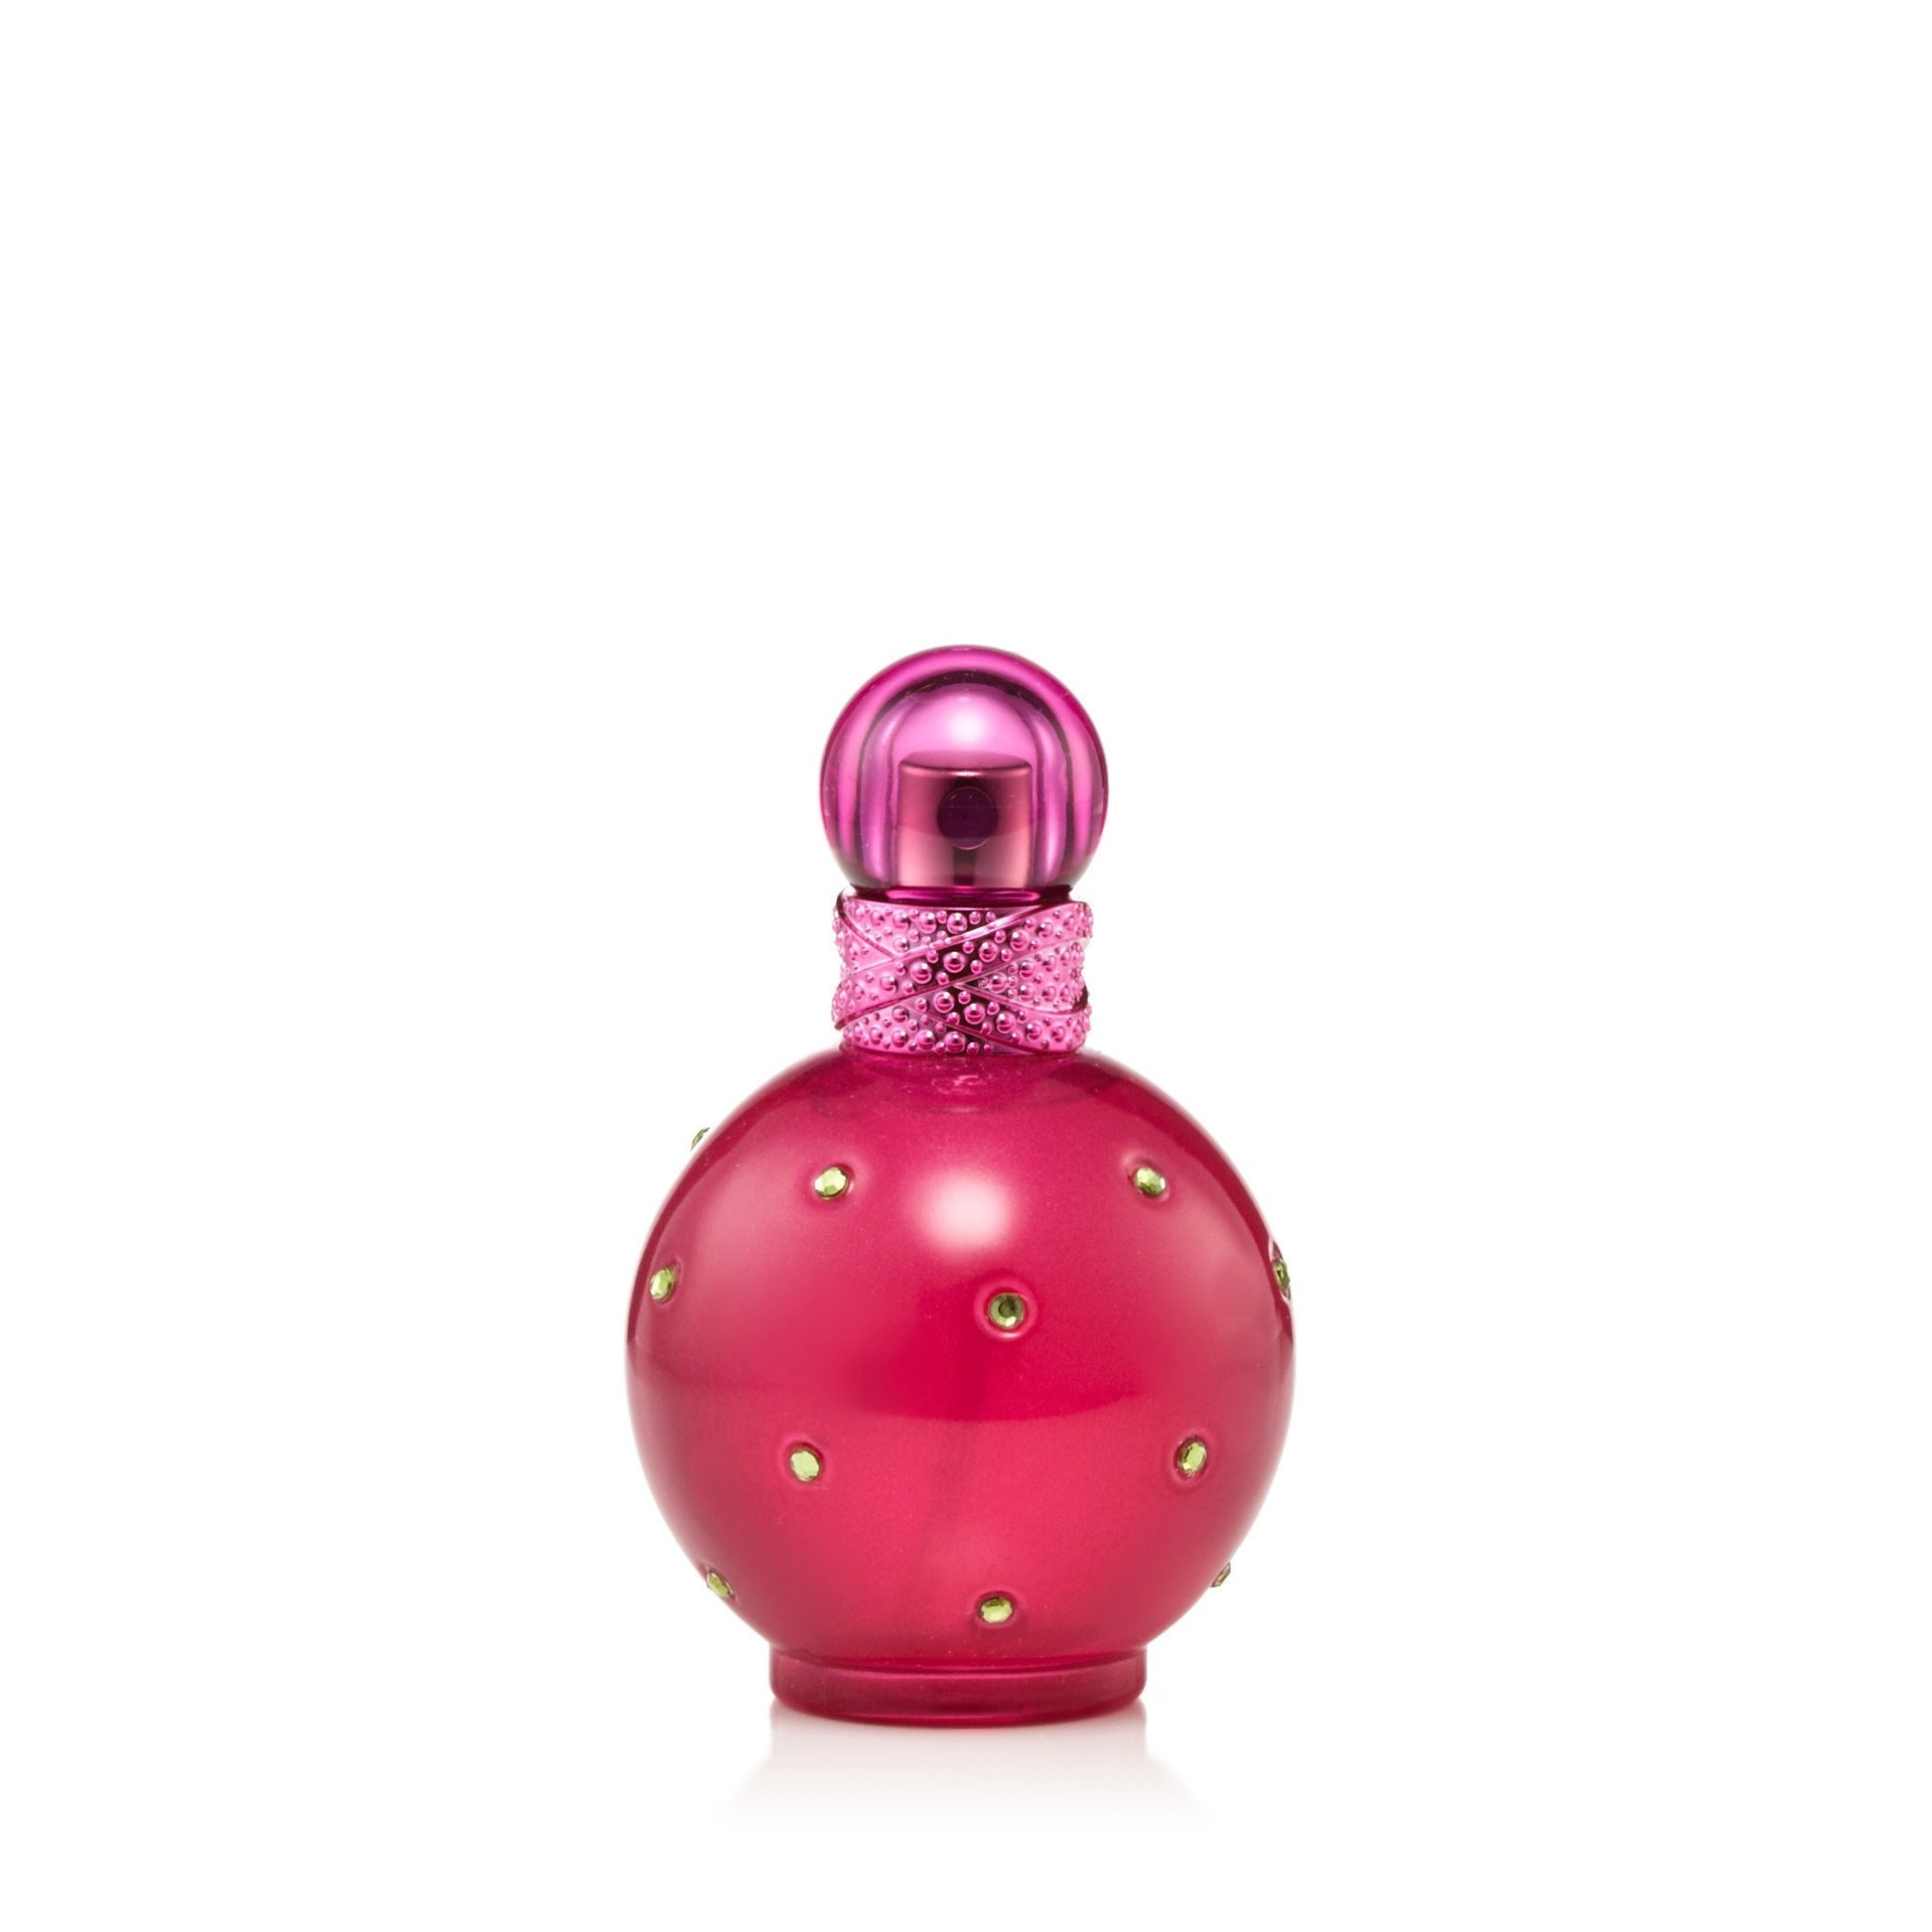 Fantasy Eau de Parfum Spray for Women by Britney Spears 1.7 oz. Click to open in modal